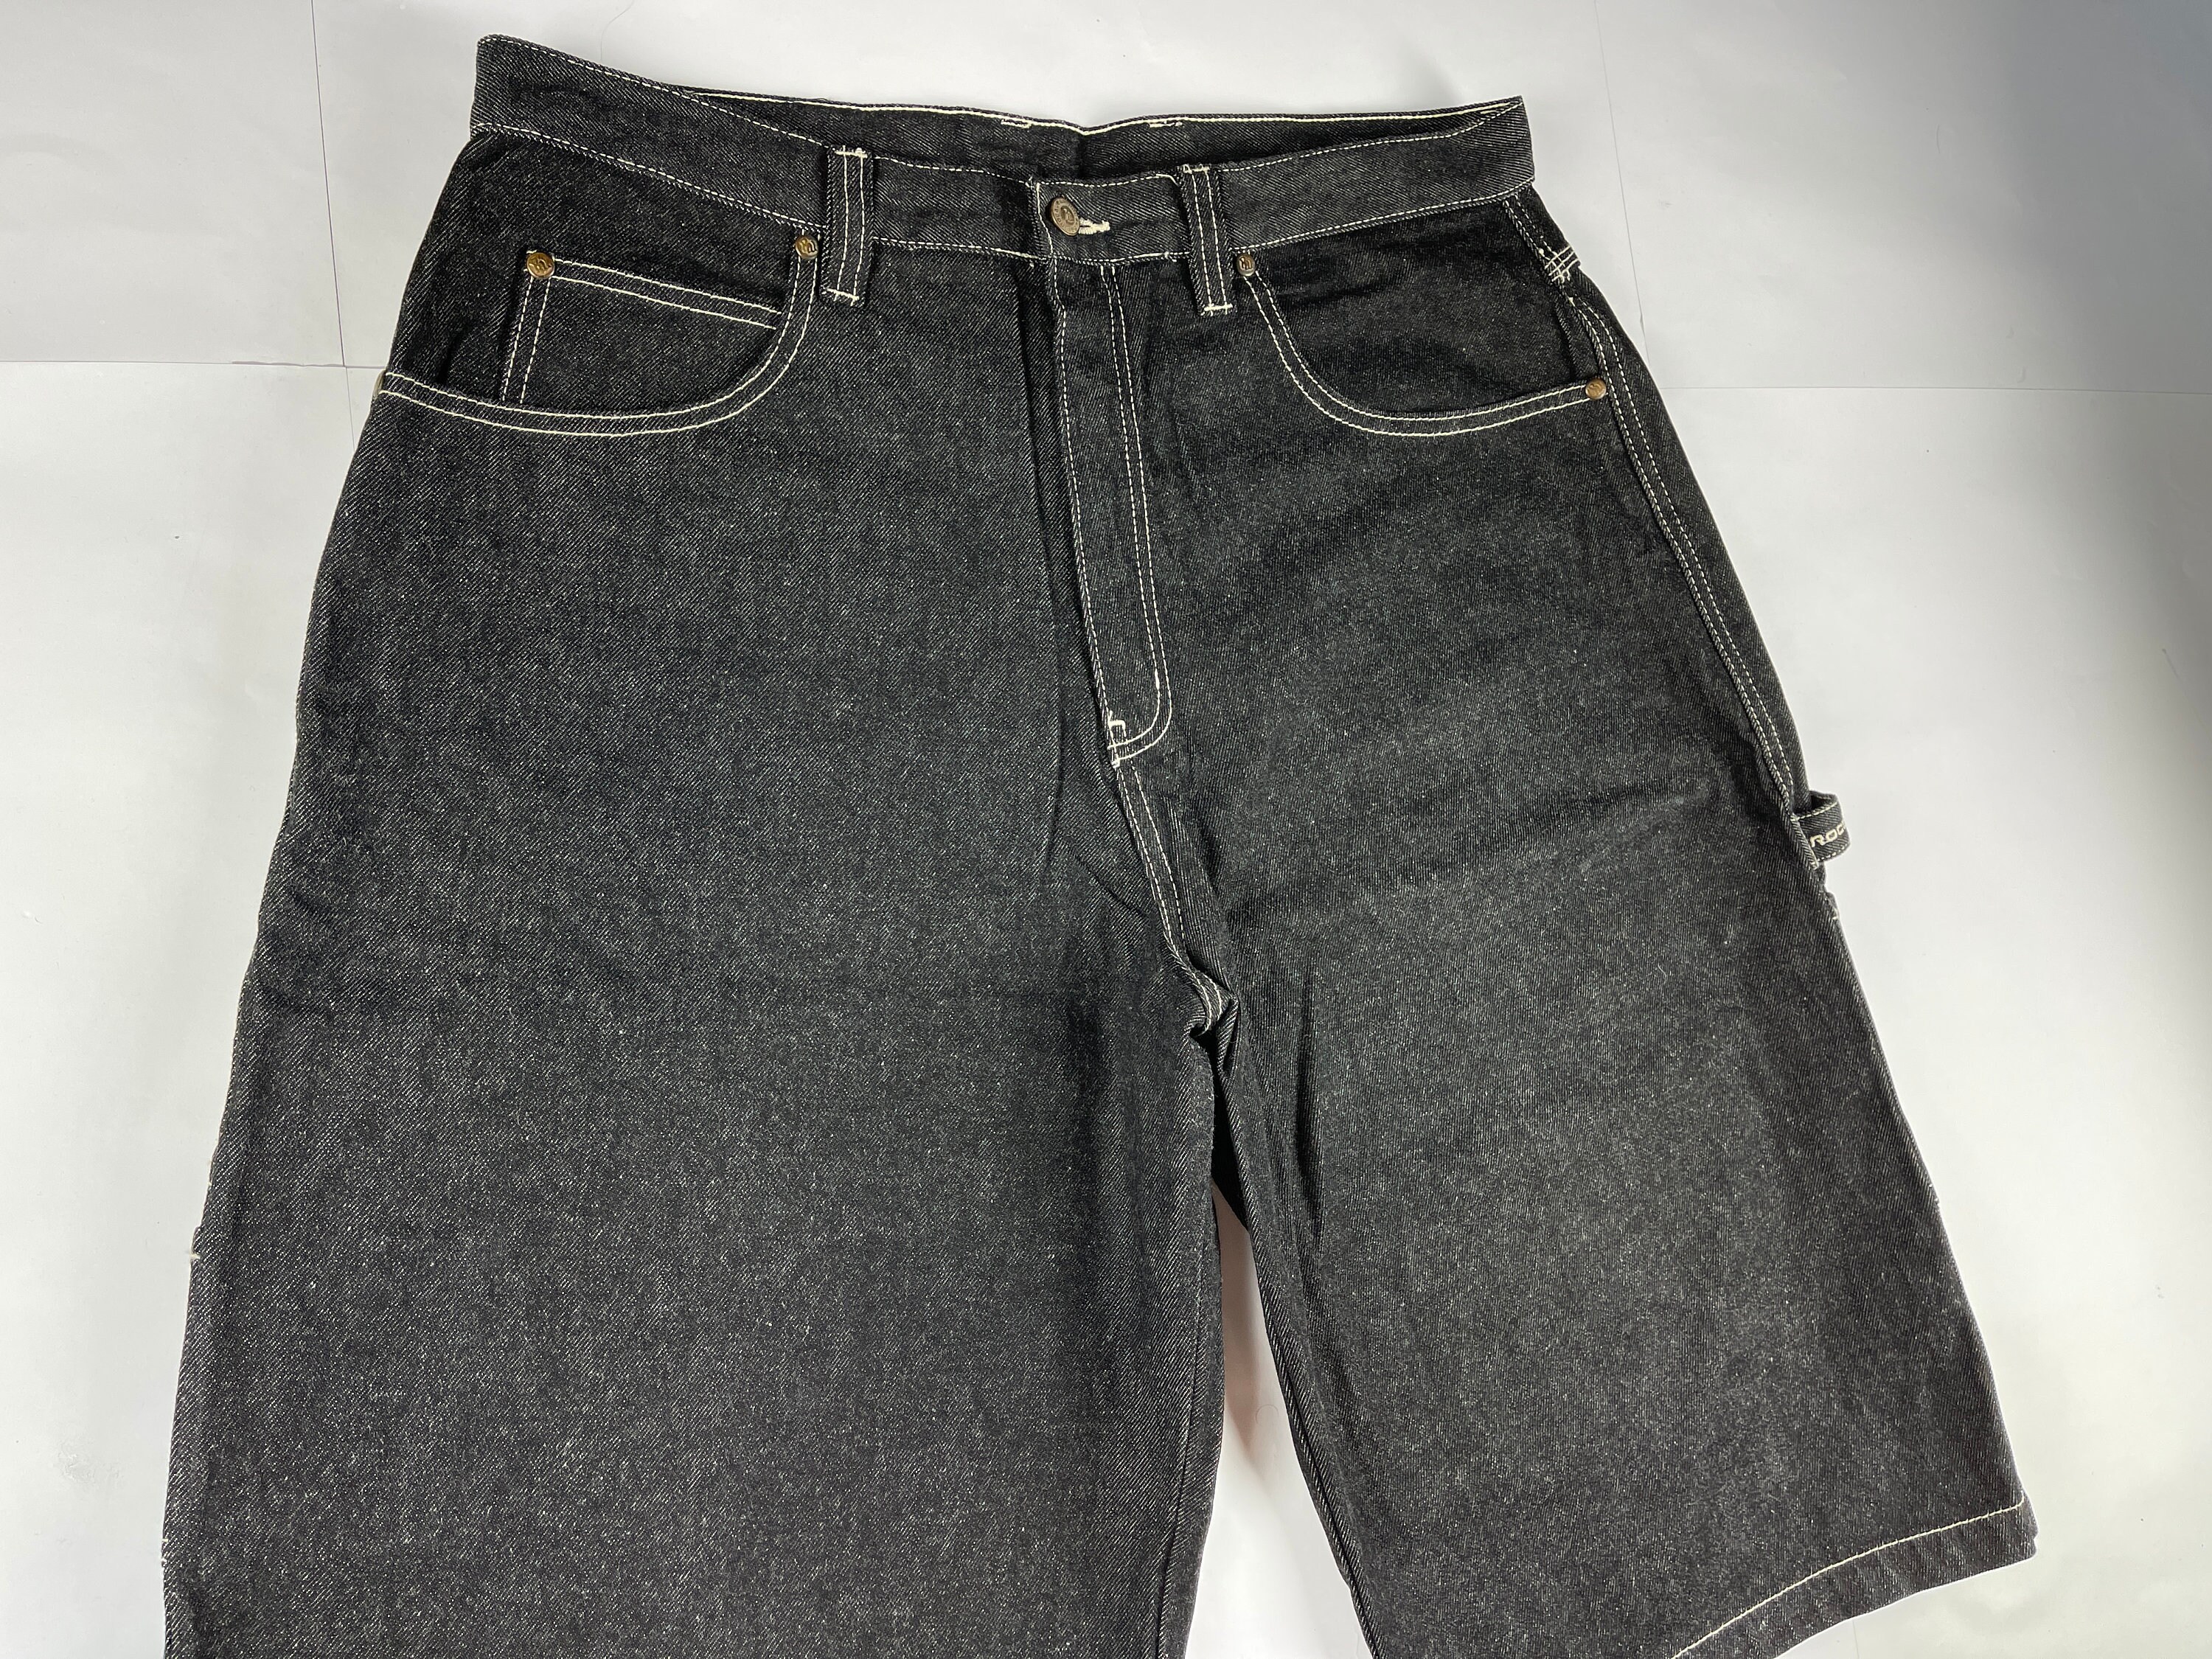 Rocawear shorts vintage Roca Wear jeans shorts 90s hip hop | Etsy